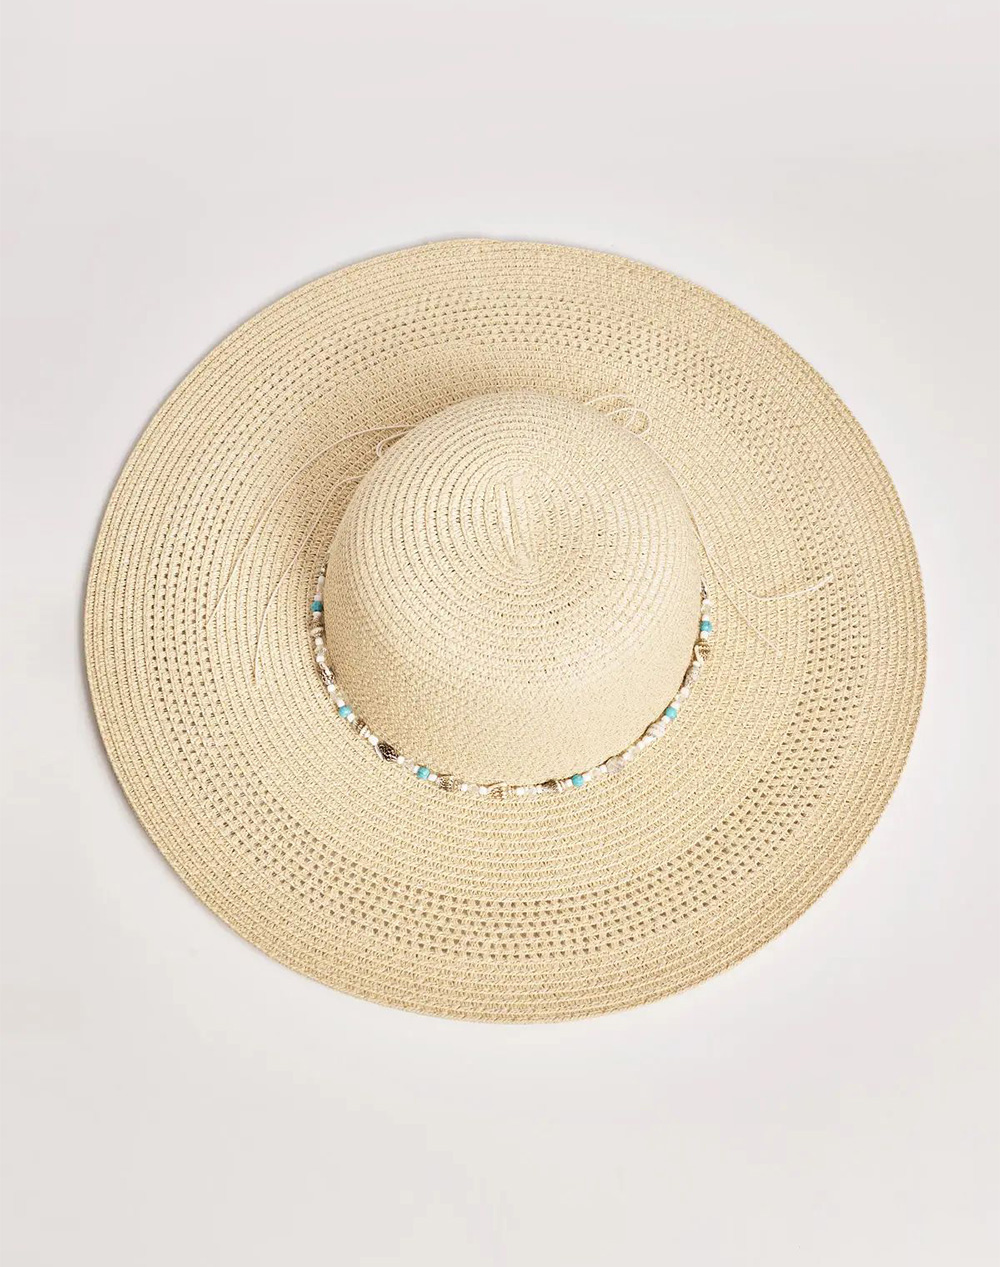 PARABITA Καπέλο ψάθινο με χάντρες και κοχύλια 17004738-009 Biege